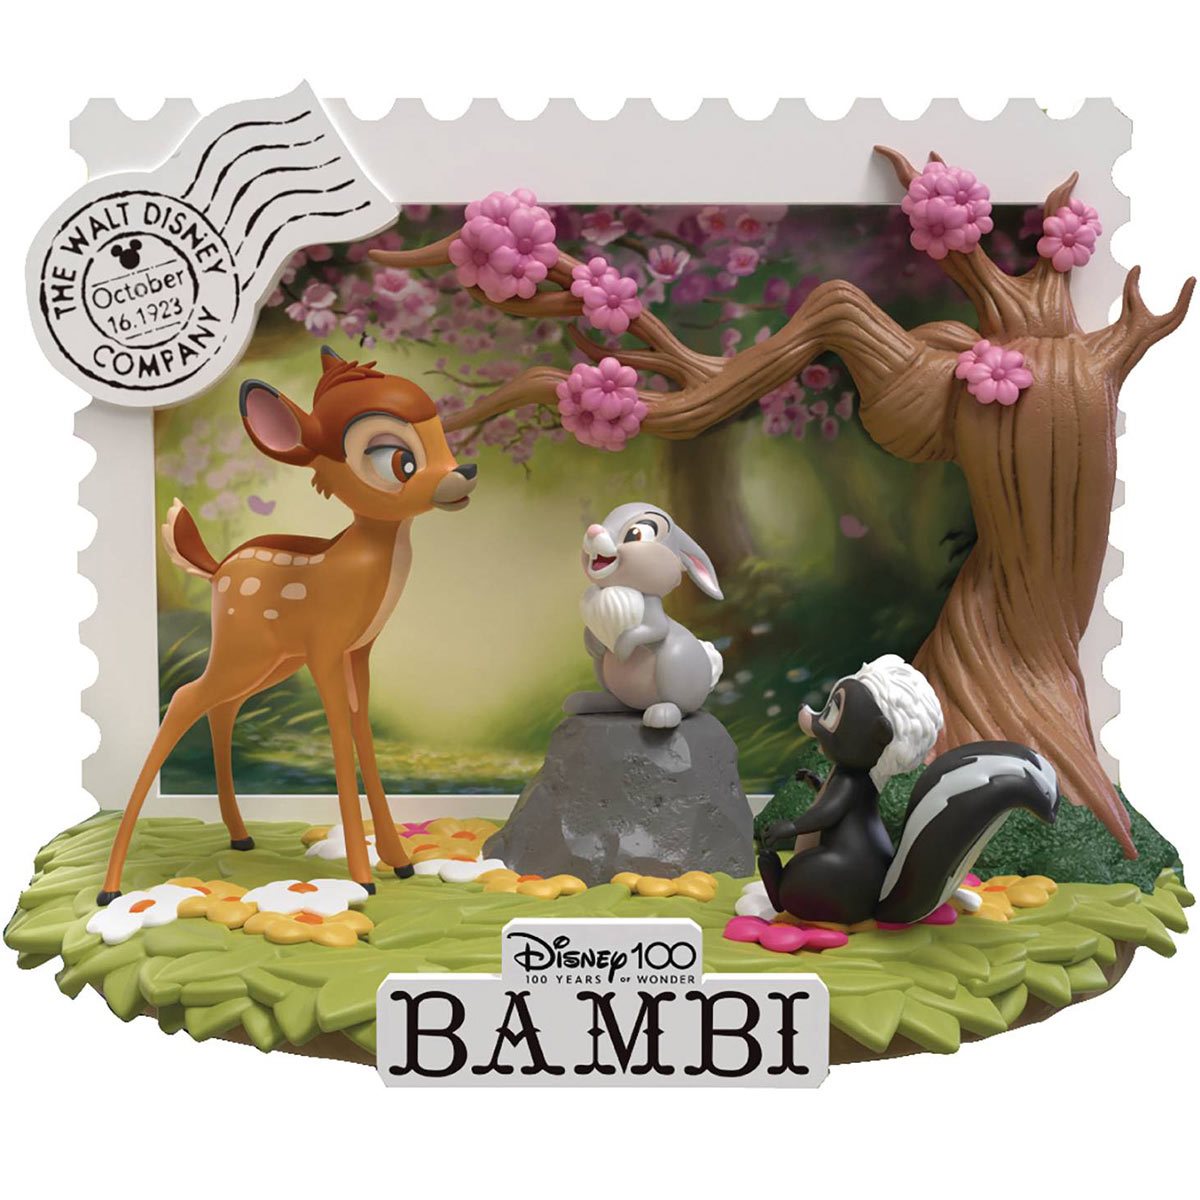 Disney 100 Years of Wonder Bambi D-Stage Statue by Beast Kingdom -Beast Kingdom - India - www.superherotoystore.com